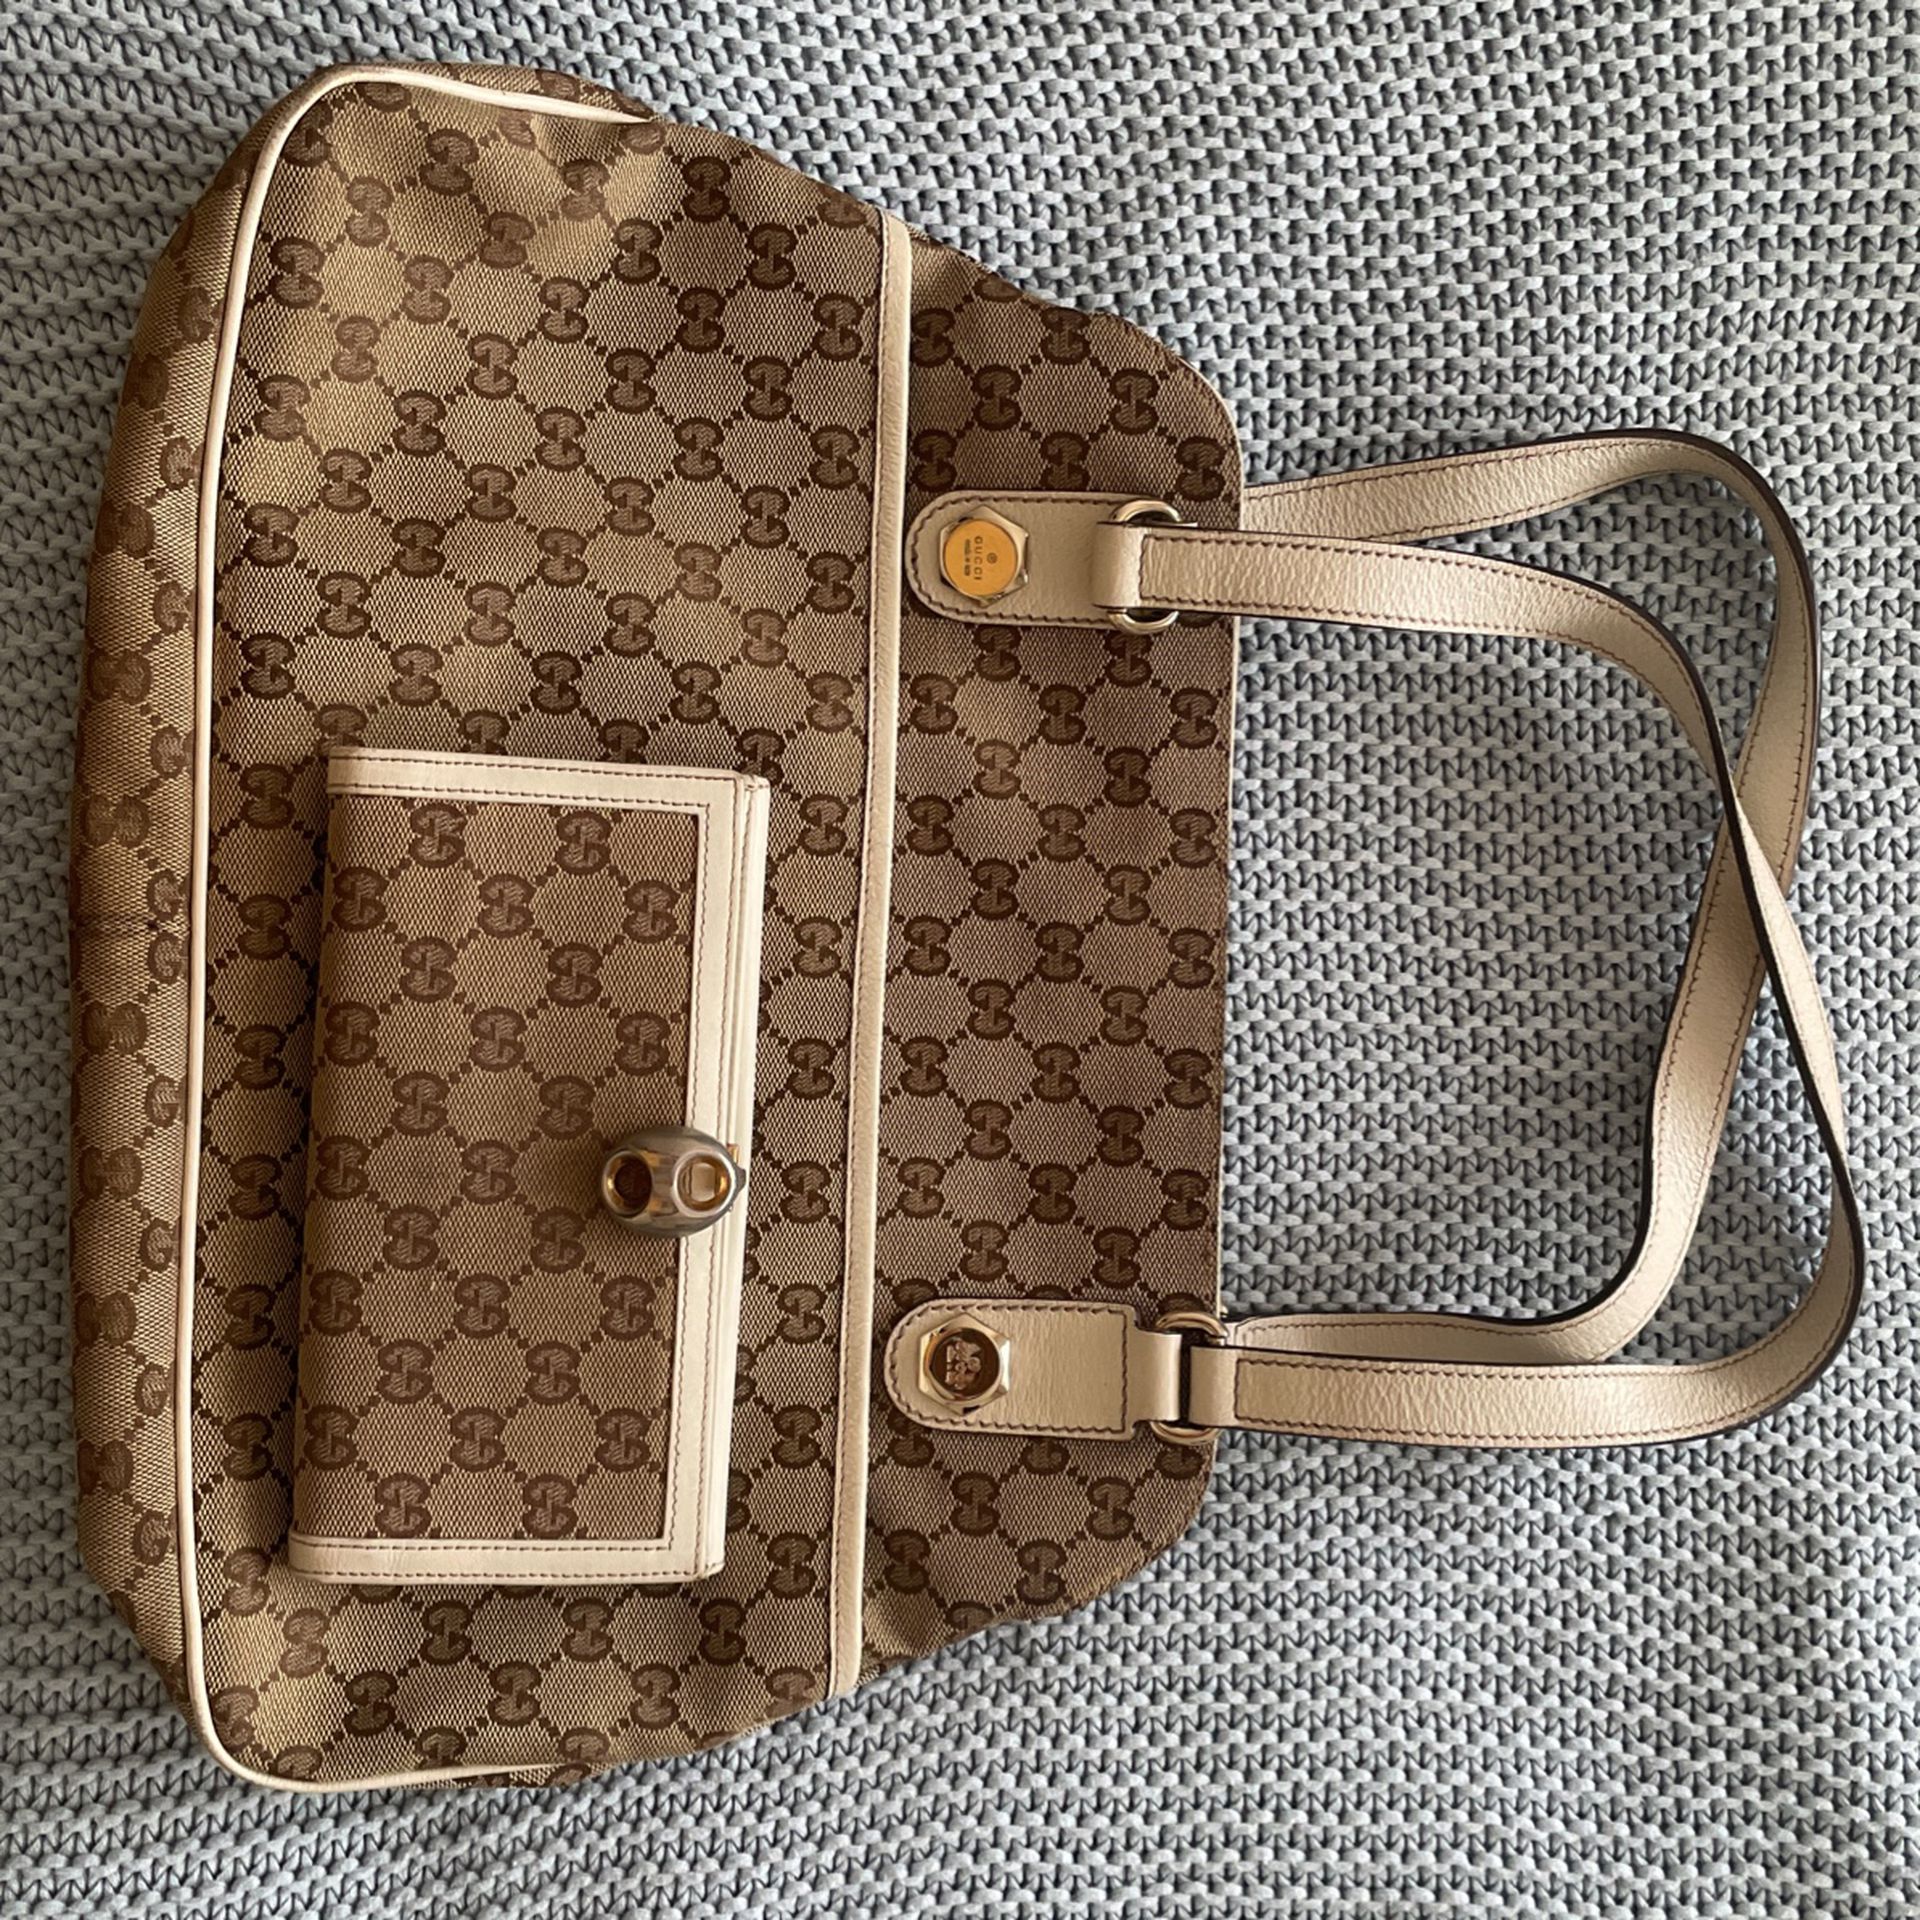 Gucci Bag and Wallet